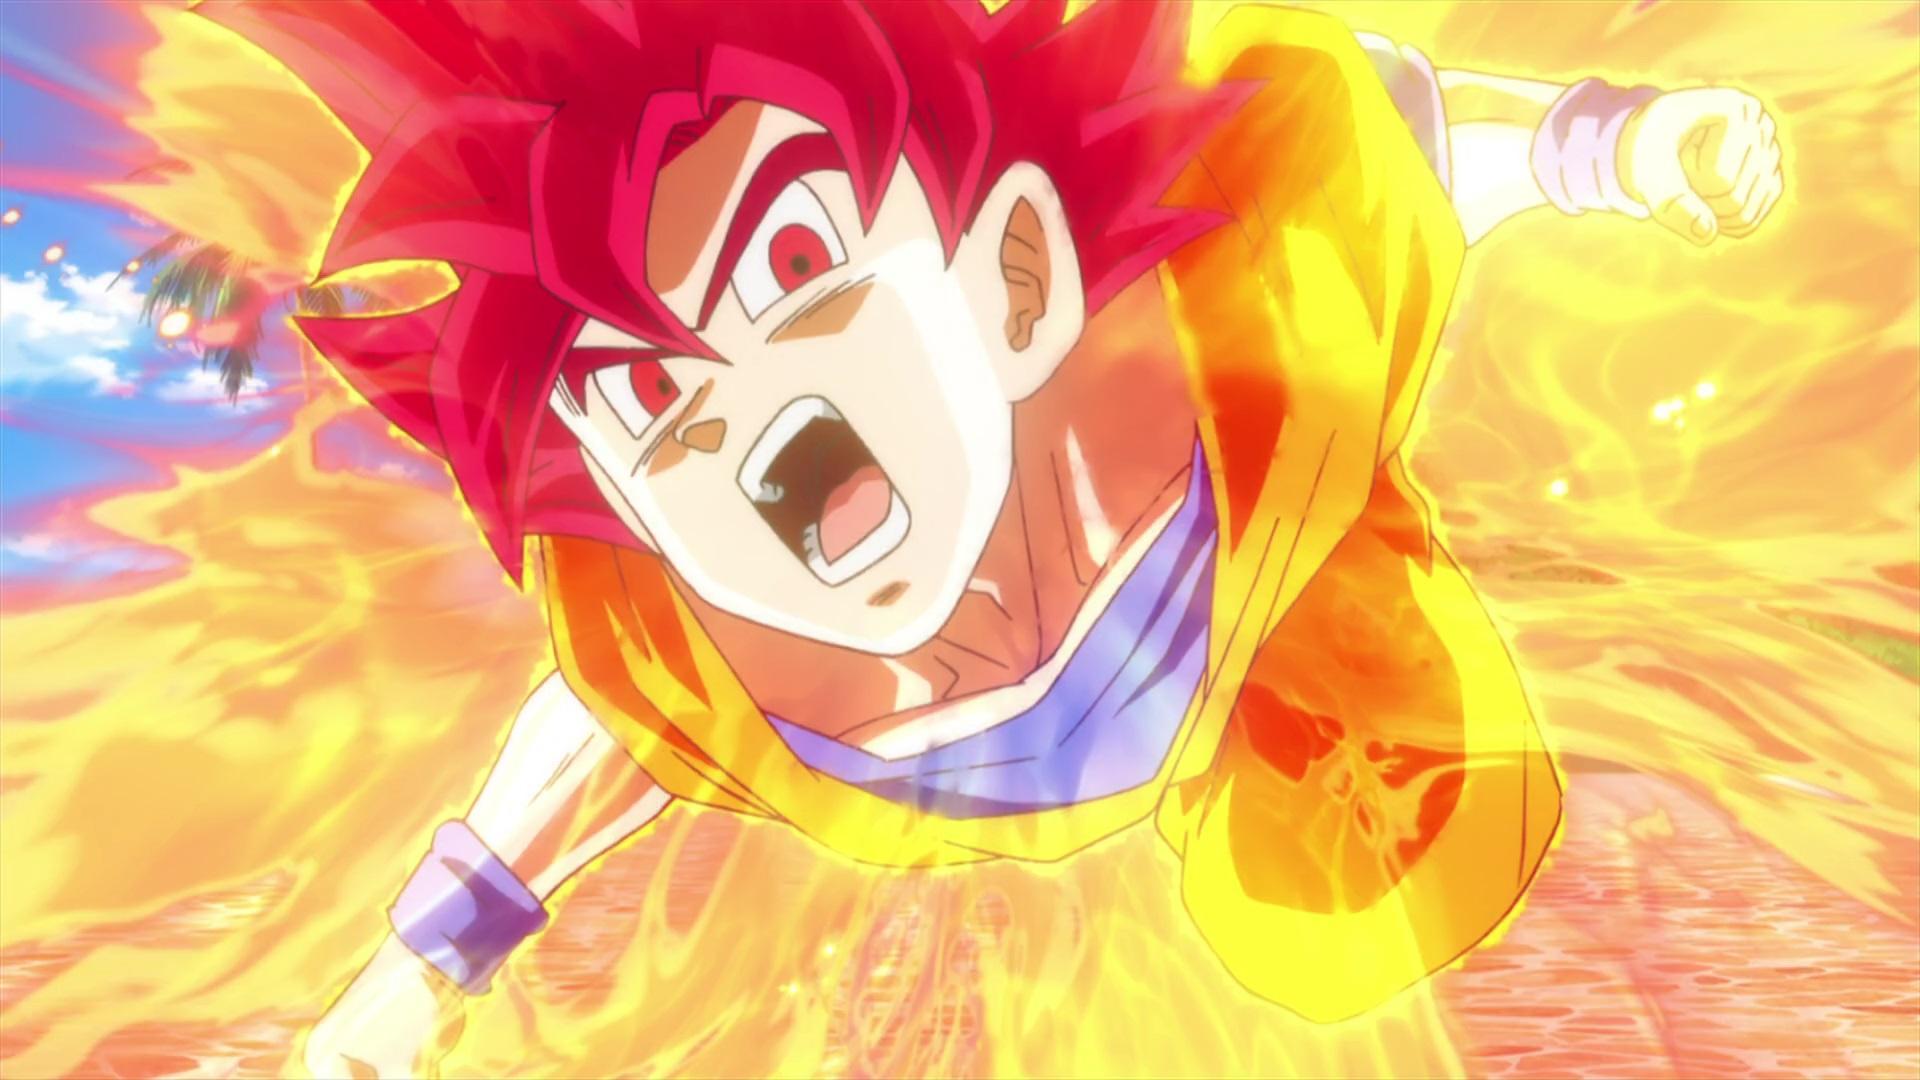 Goku in God Mode.